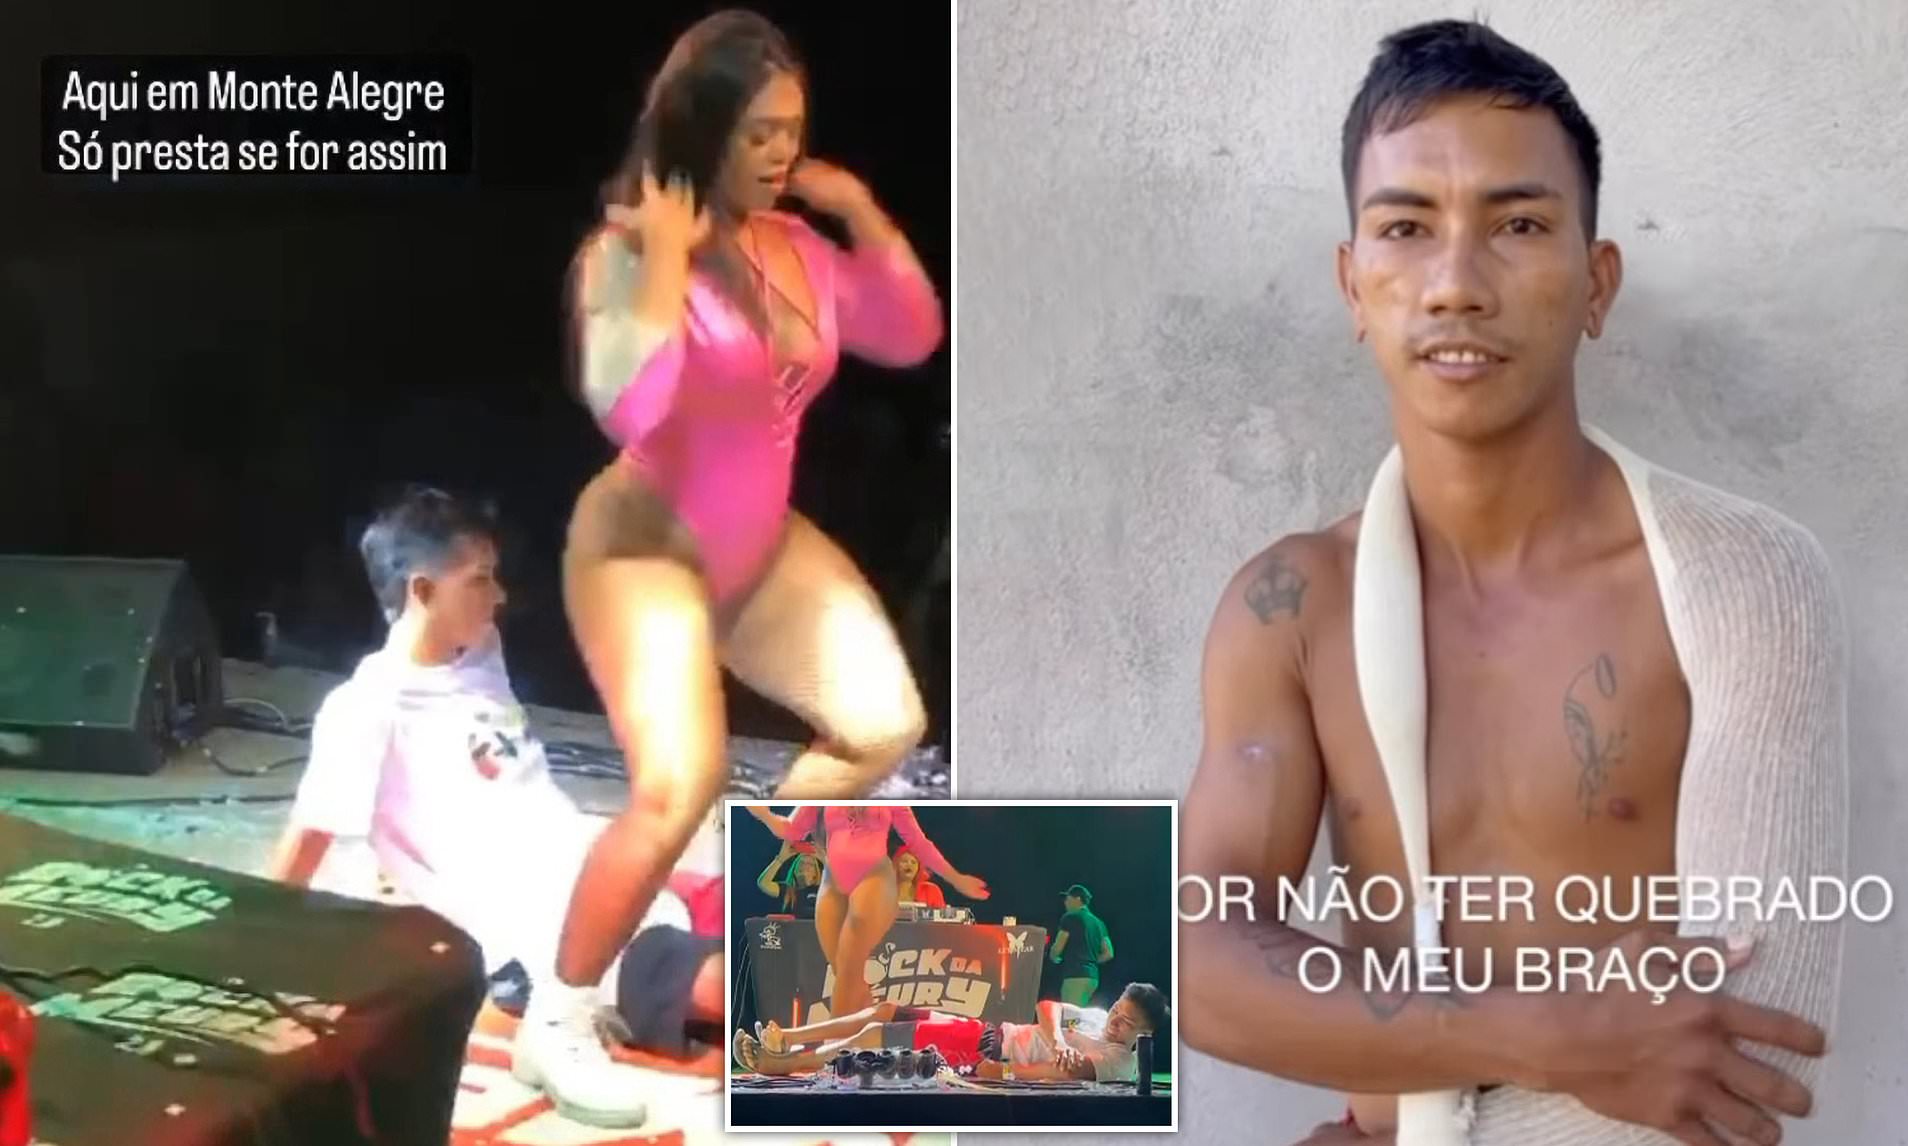 Lap Dance Brazil clit tease